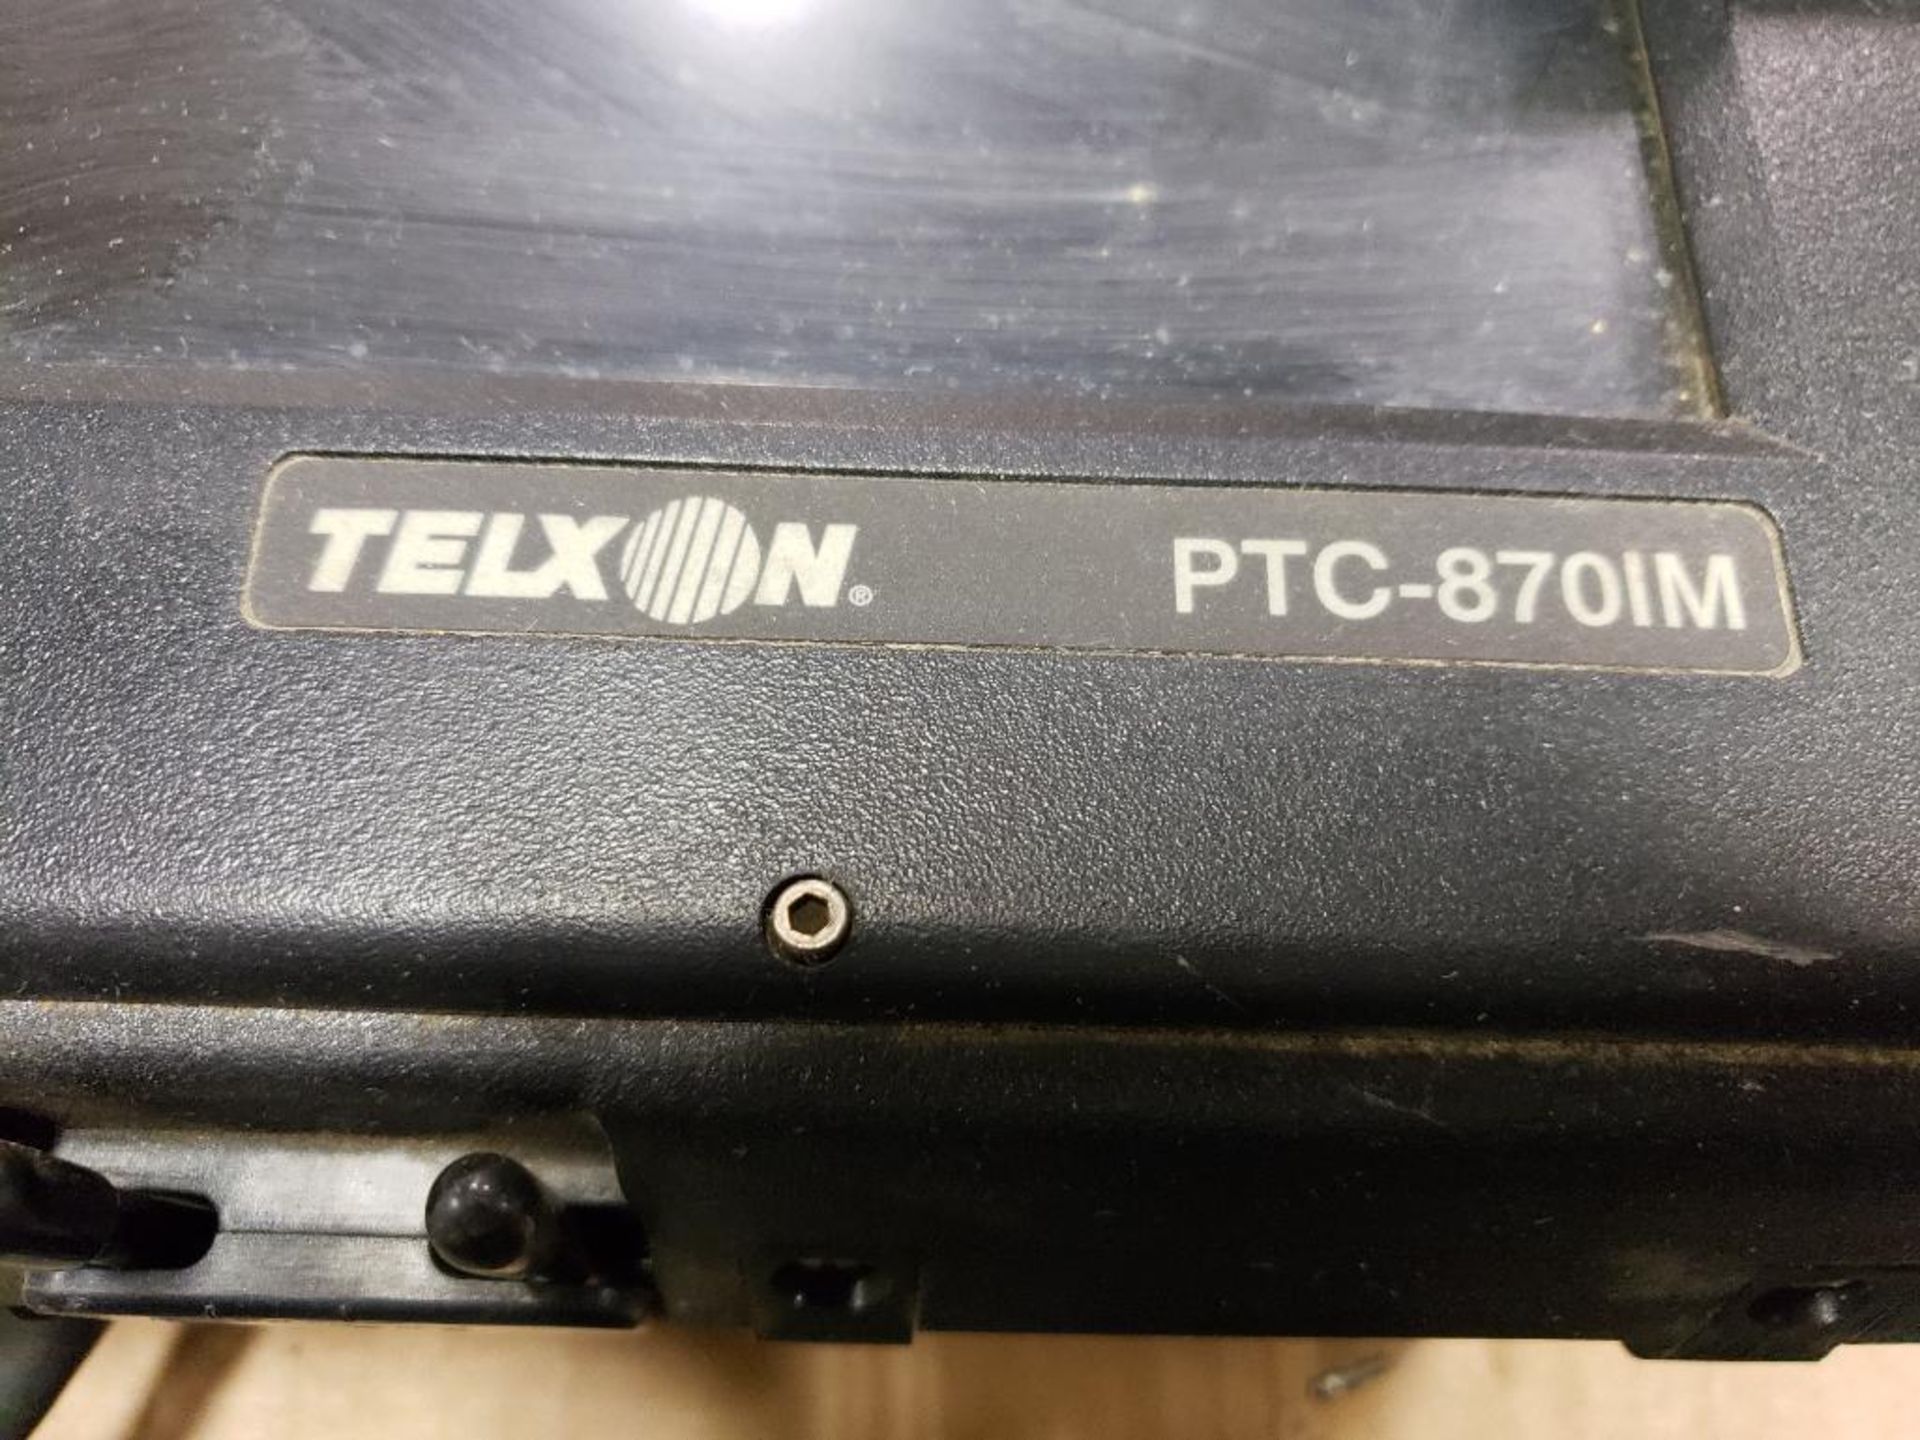 Telxon PTC-870IM vehicle computer terminal. - Image 2 of 6